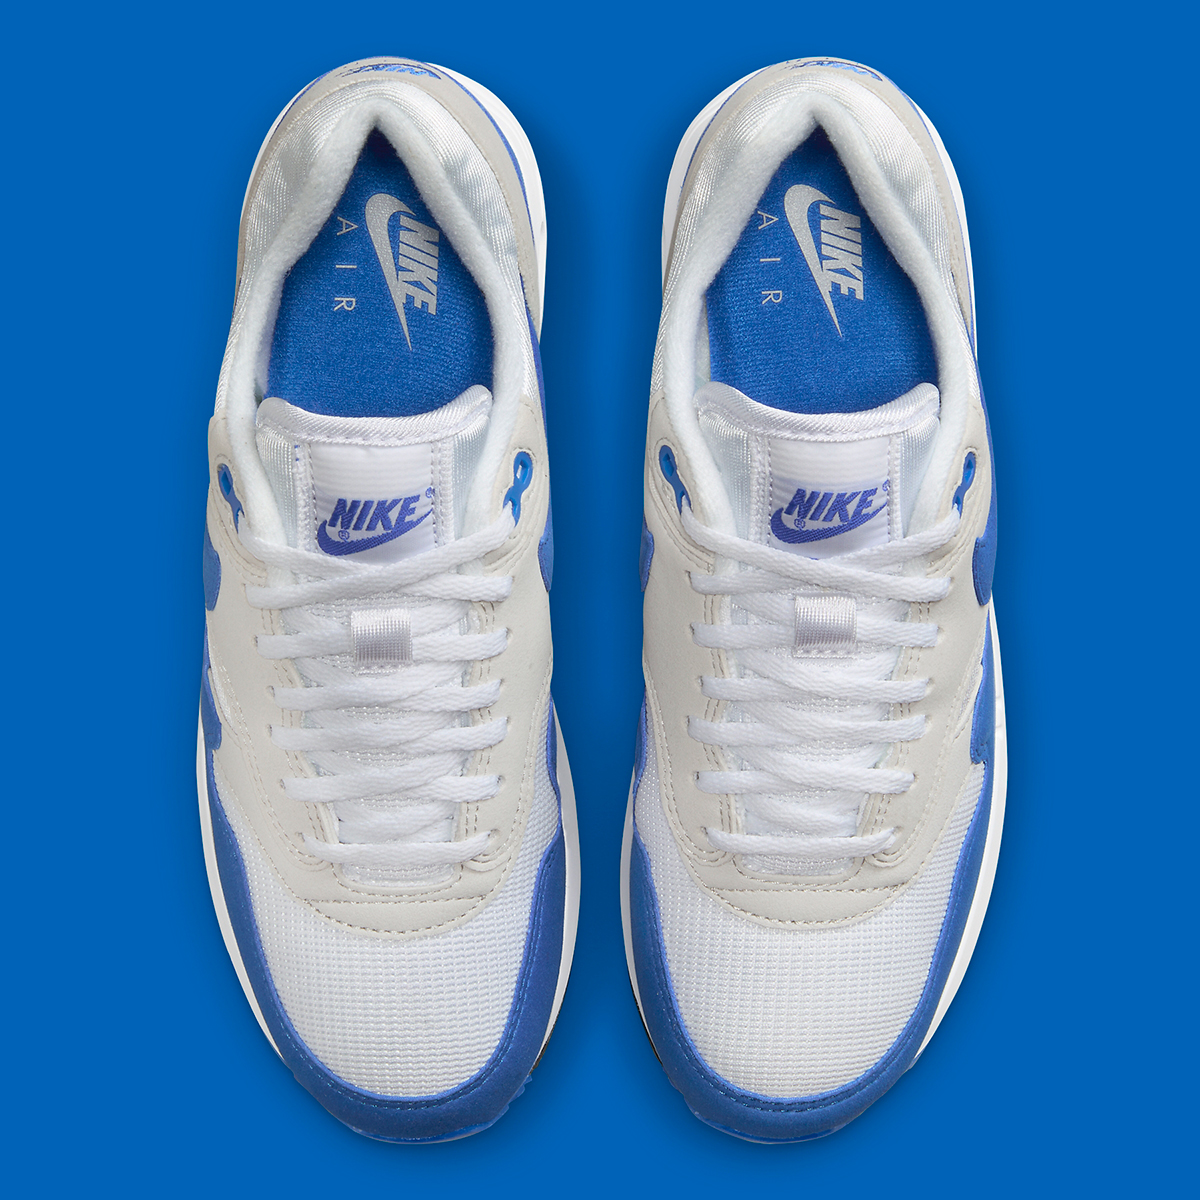 nike air presto woven navy blue shoes sneakers 86 Royal Do9844 101 5